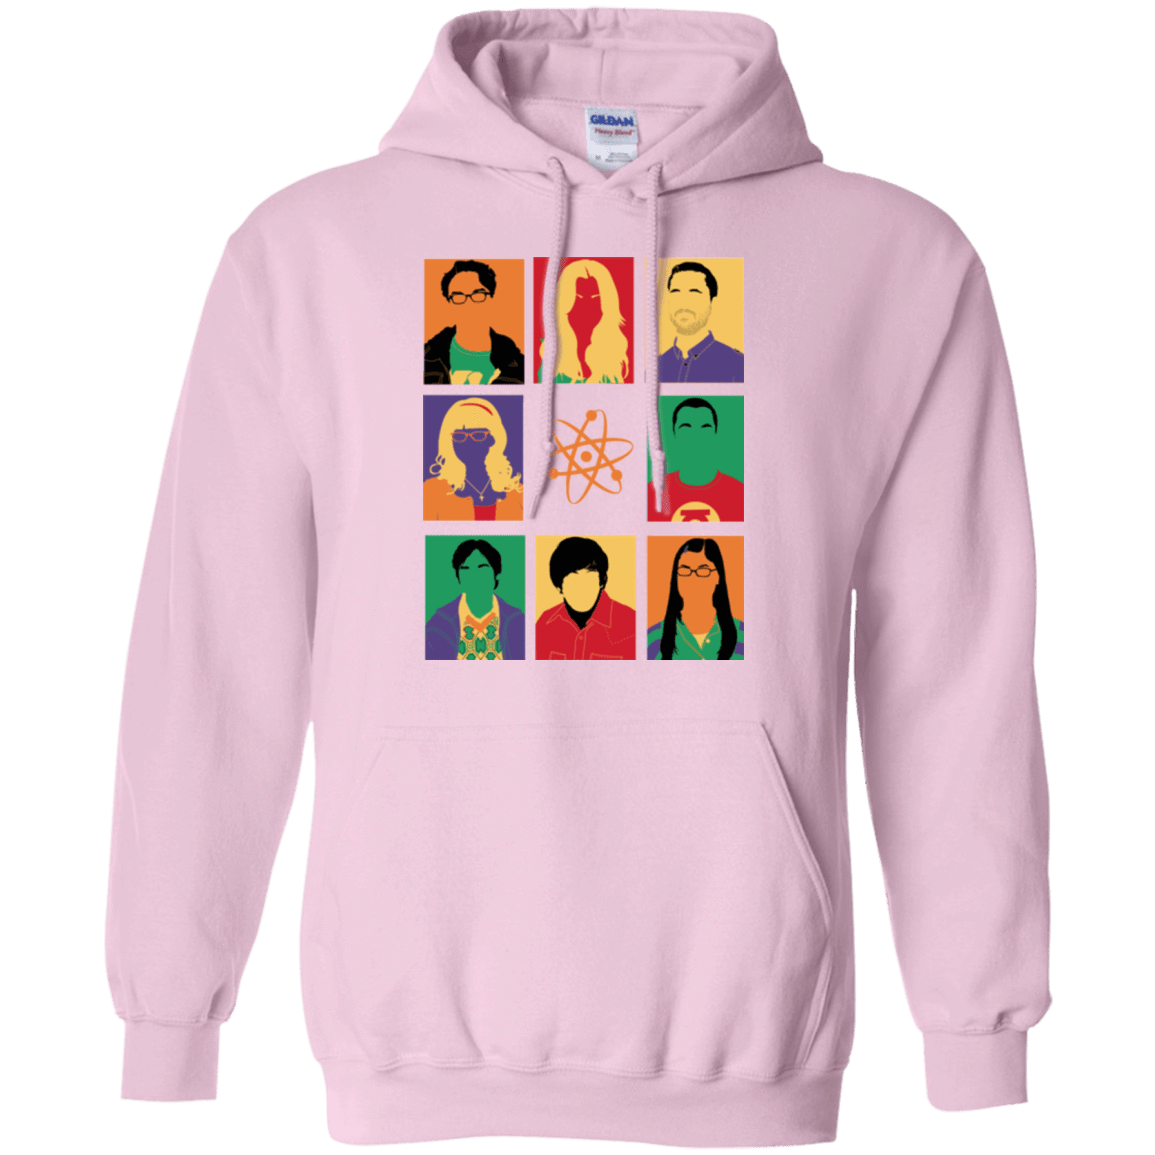 Sweatshirts Light Pink / Small Theory pop Pullover Hoodie